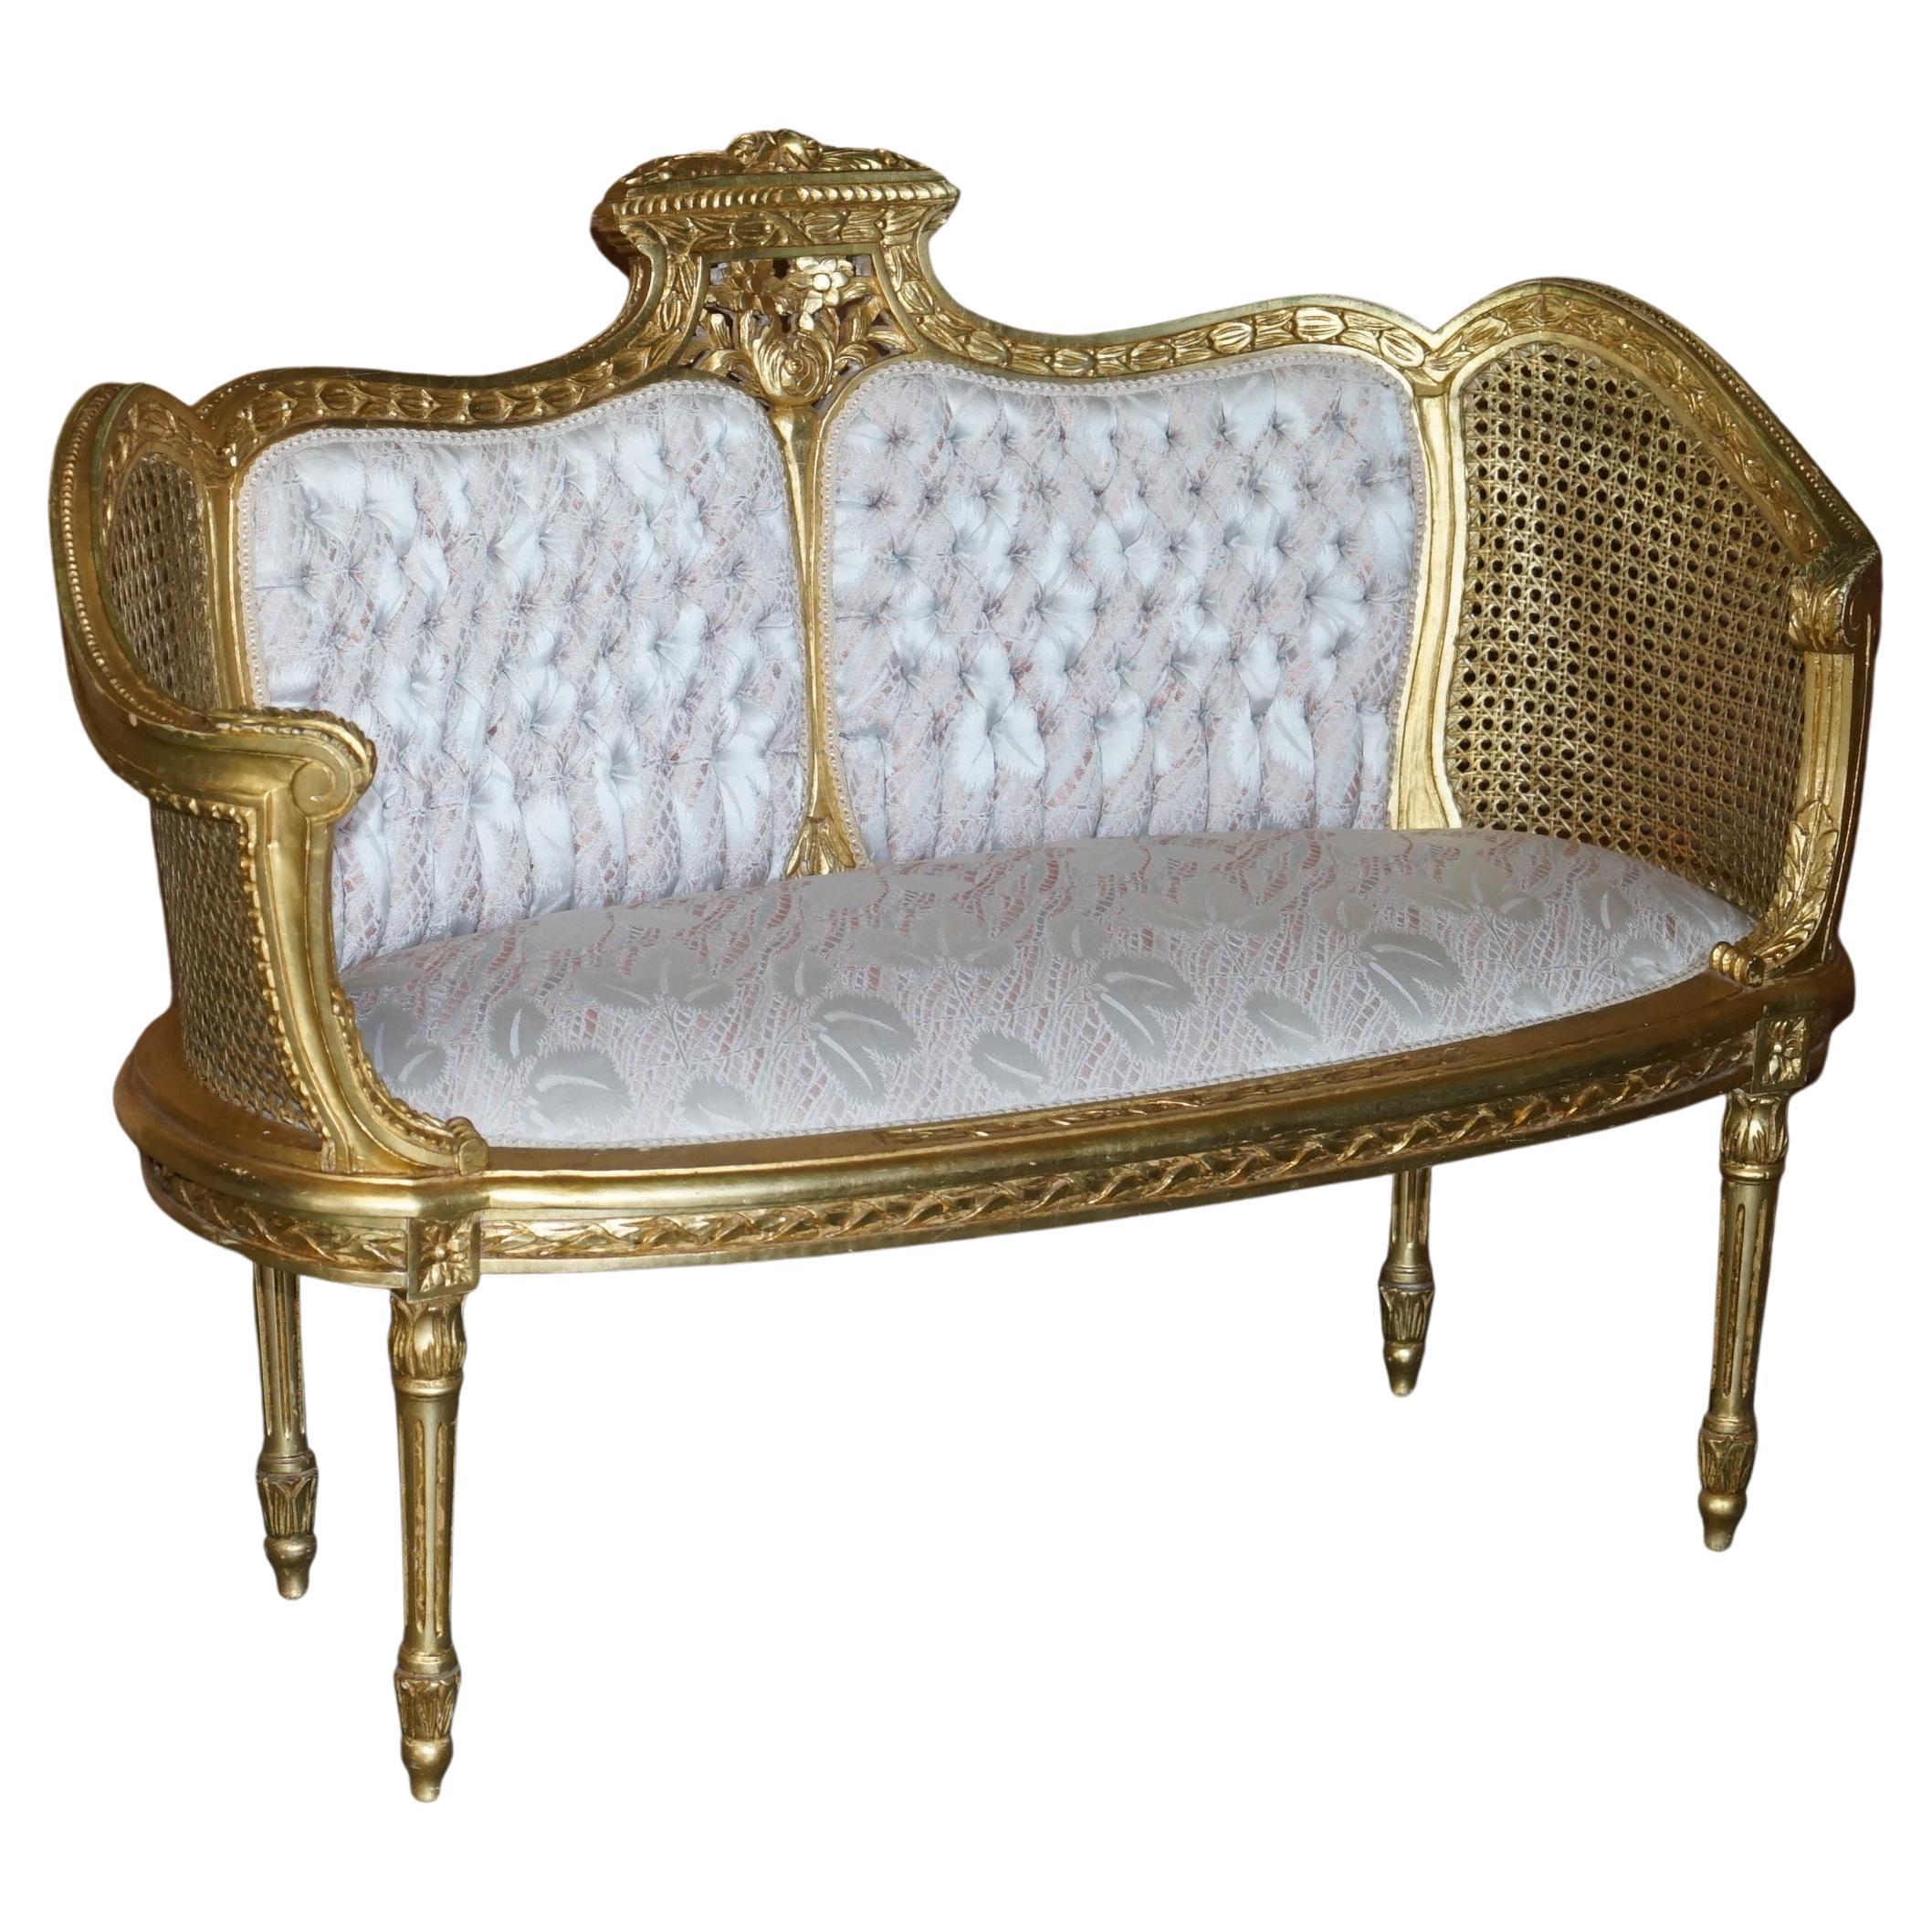 Canapé Louis XVI Bergere en bois doré d'époque Napoléon III vers 1870 en vente